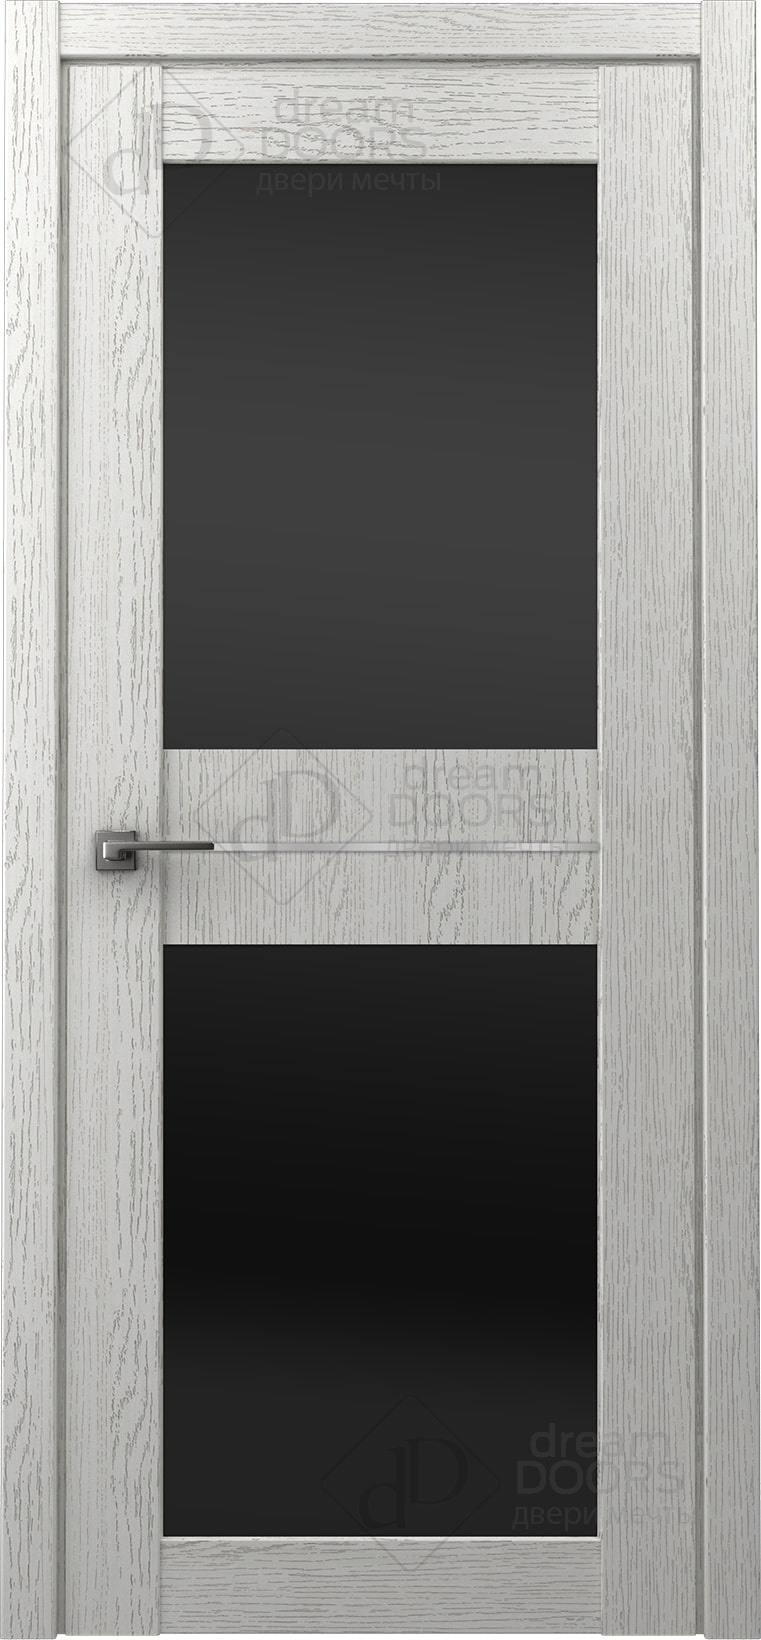 Dream Doors Межкомнатная дверь Престиж 2, арт. 16431 - фото №4